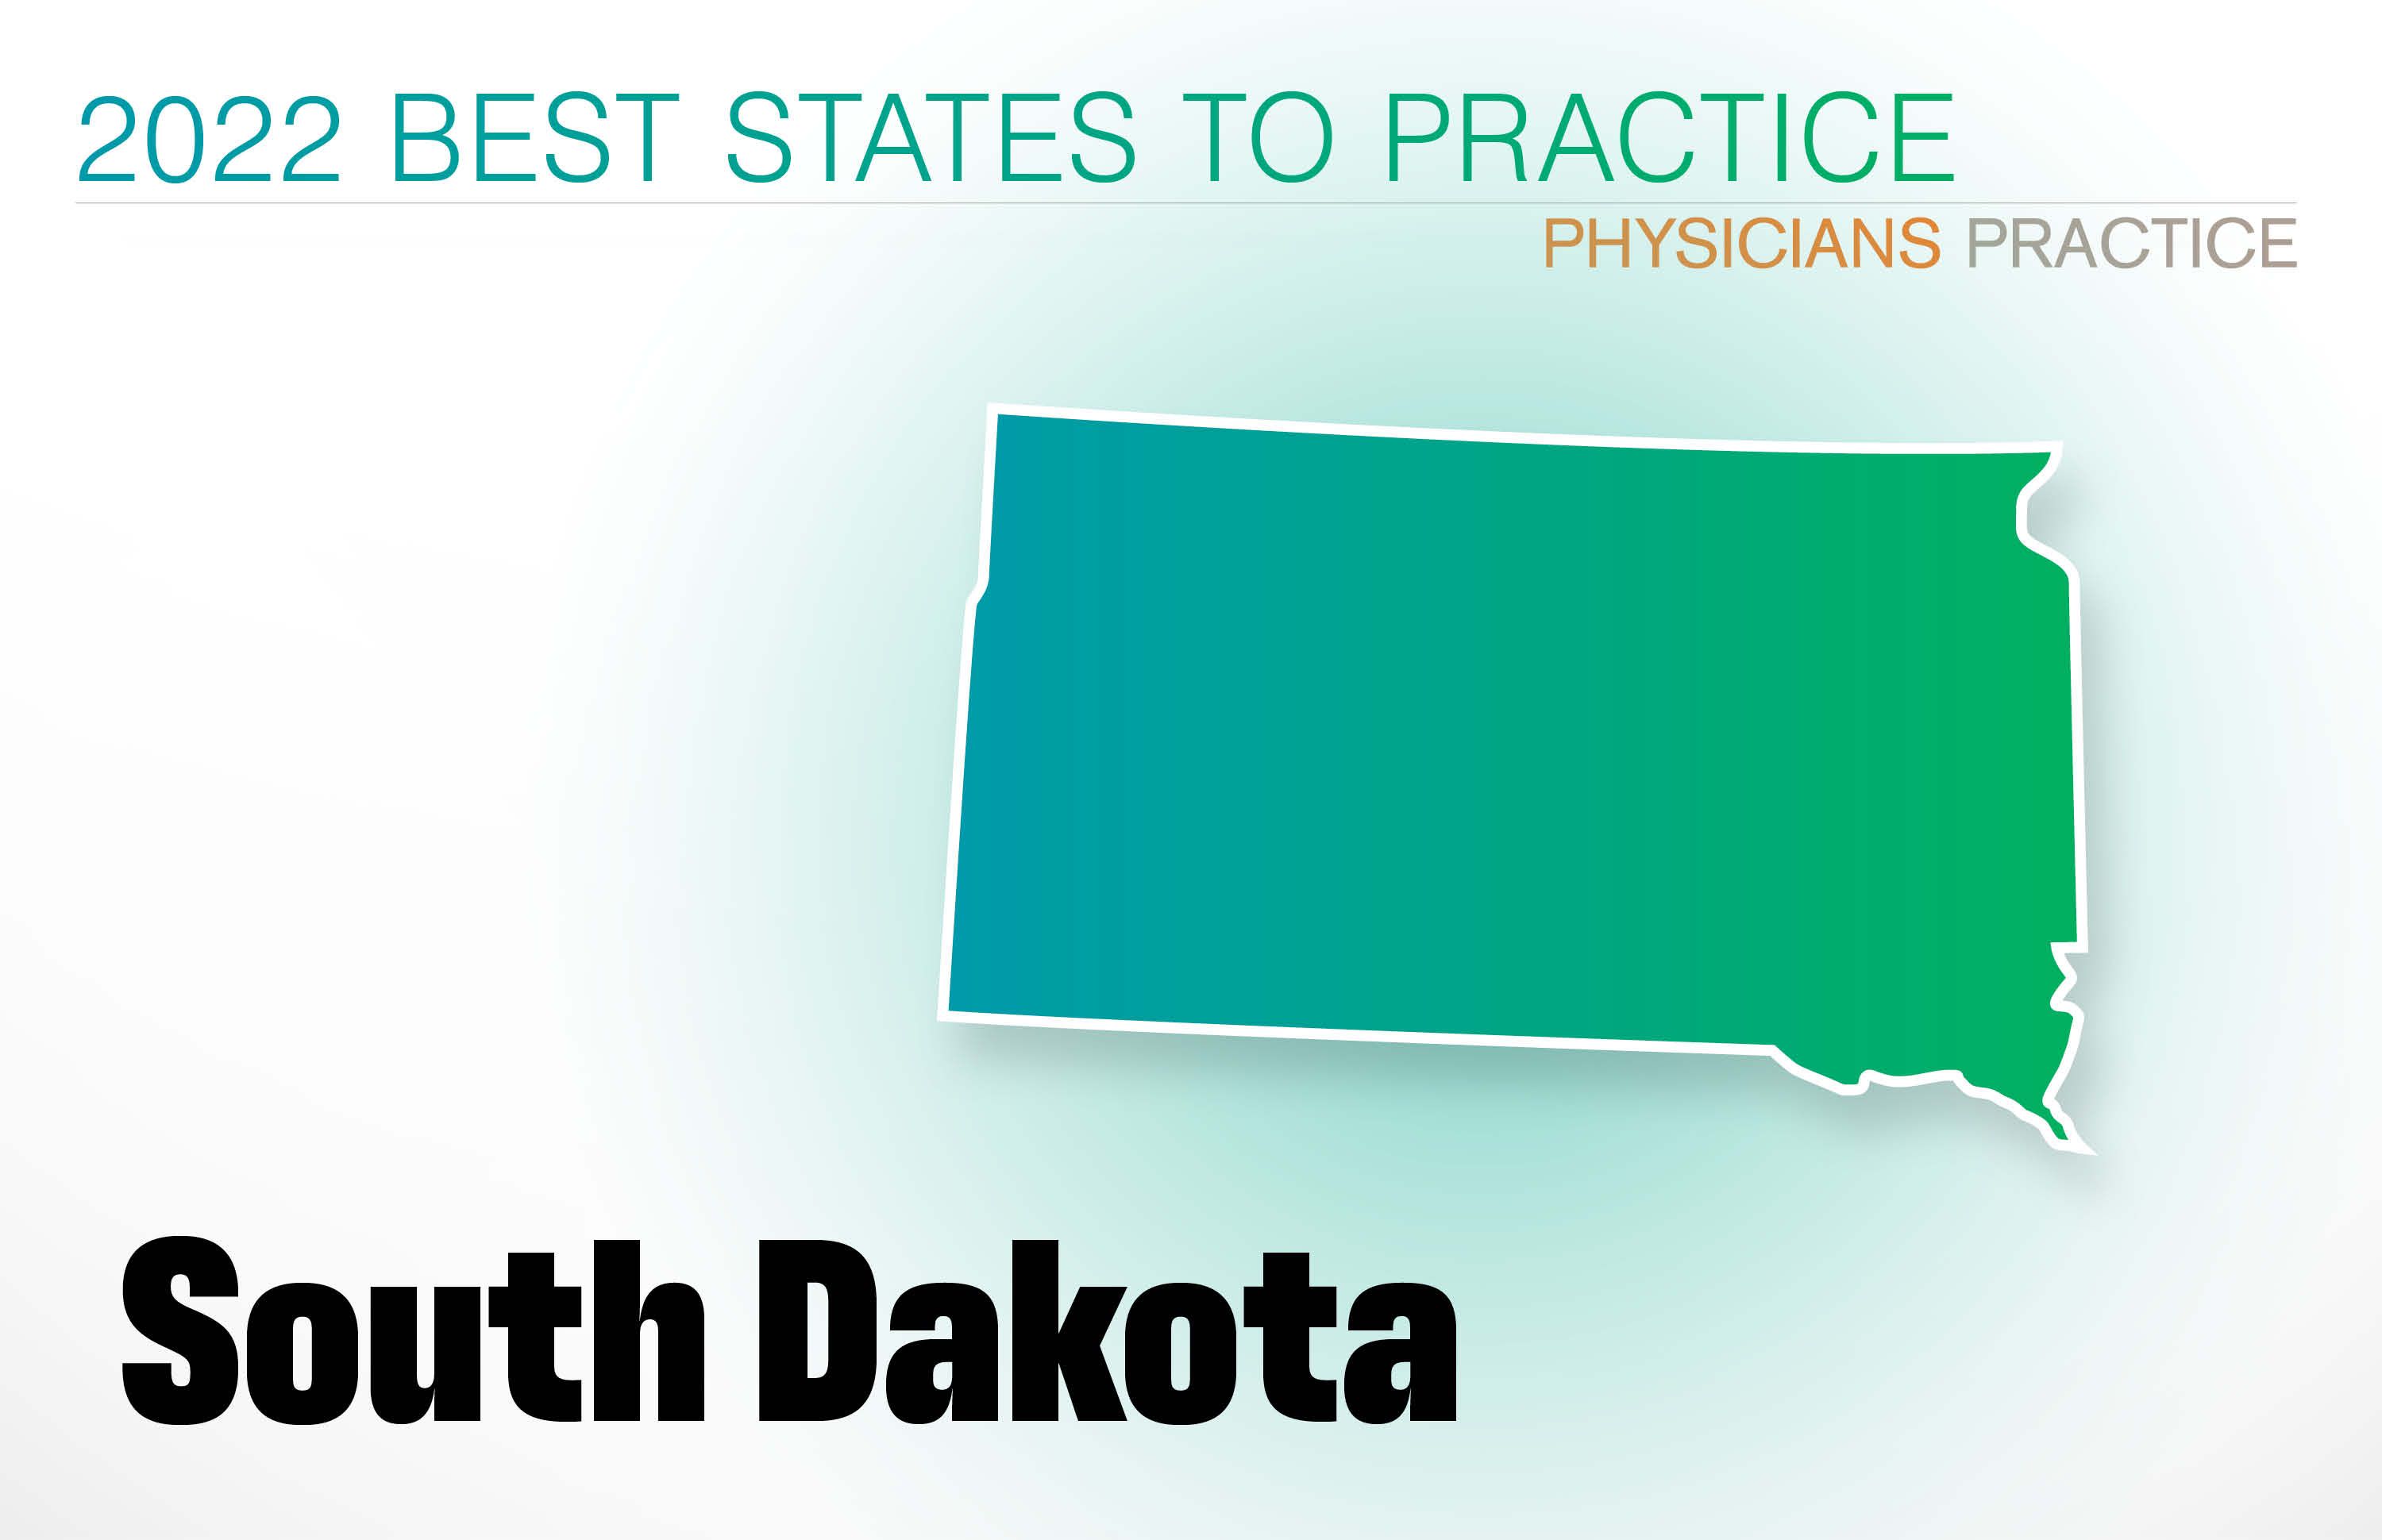 #2 South Dakota